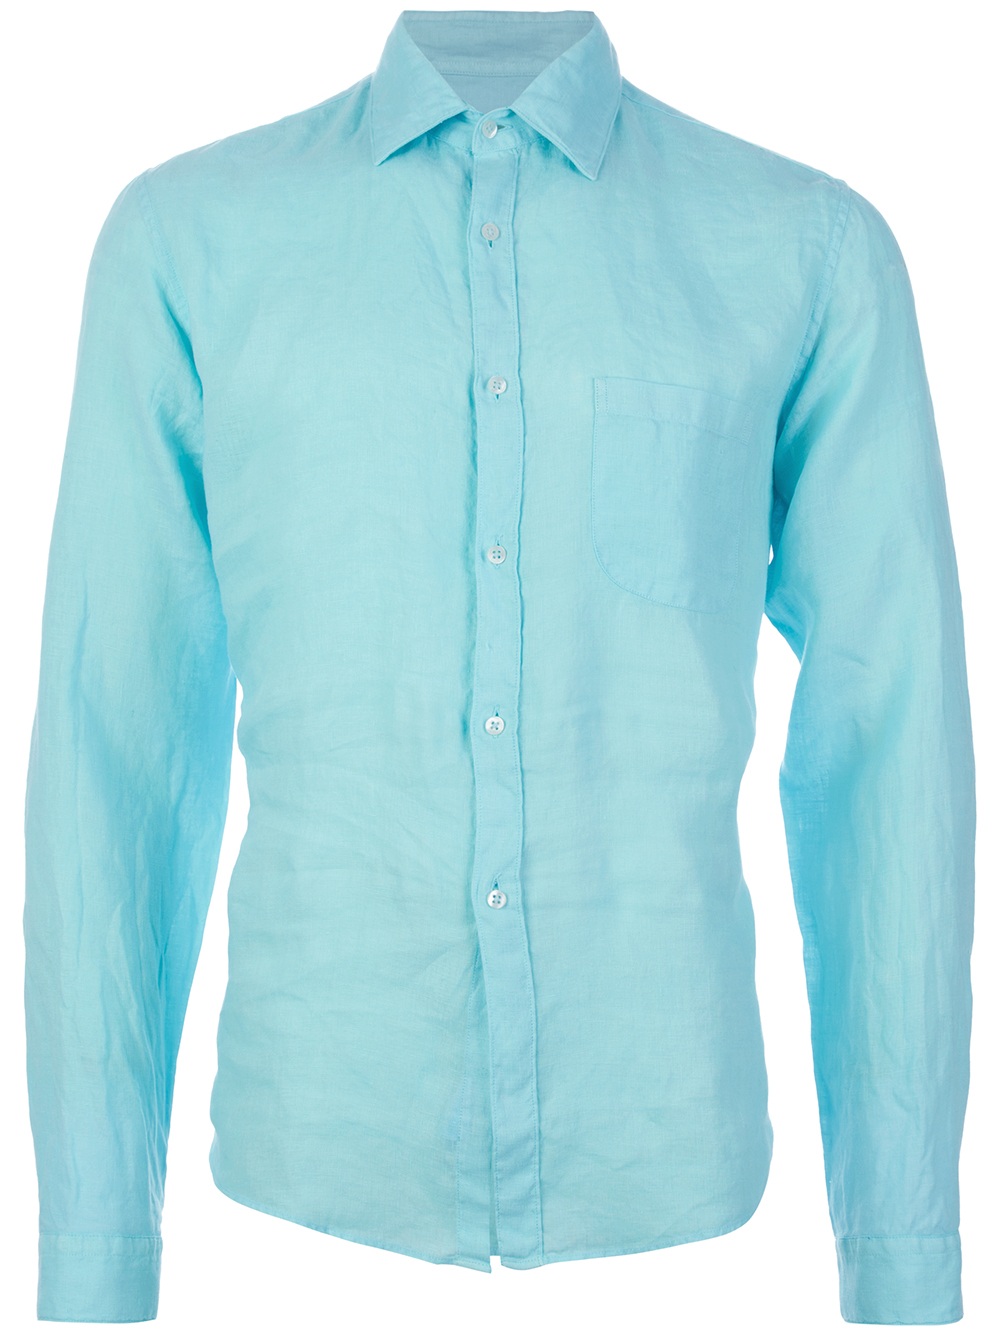 Robert Friedman Bobby Slim Fit Shirt in Aquamarine (Blue) for Men - Lyst